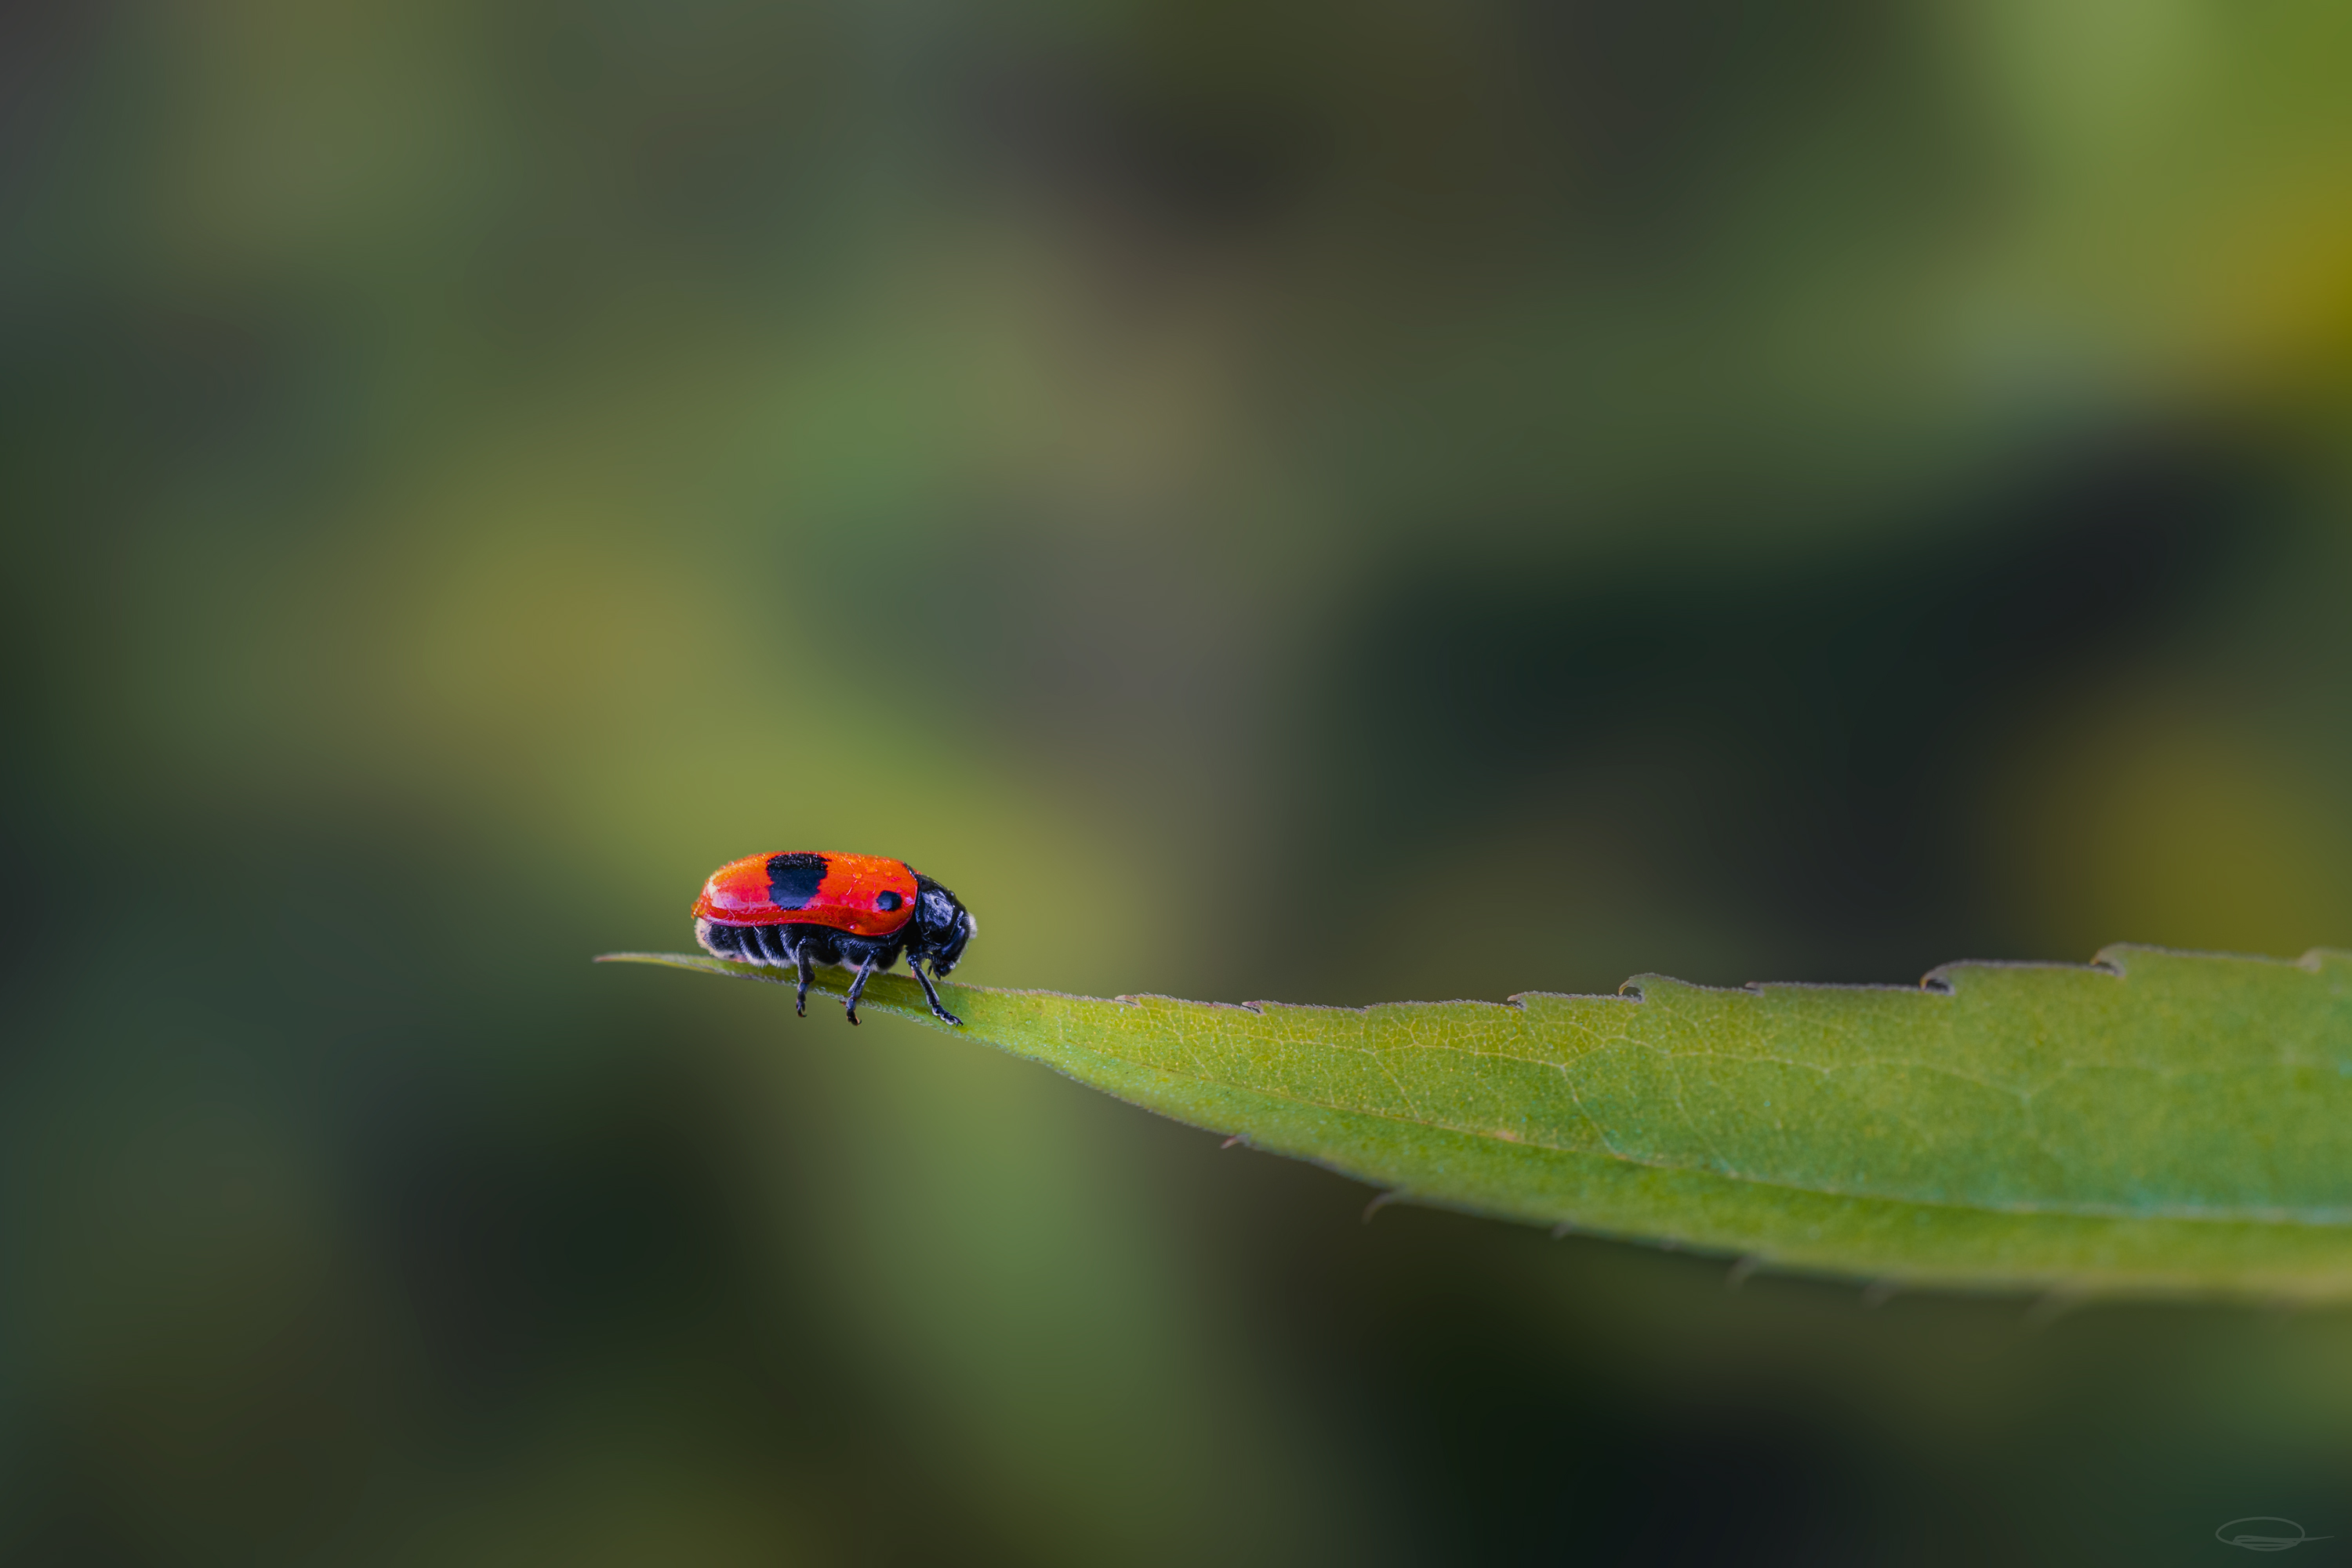 Clytra laeviuscula - the Ant Bag Beetle